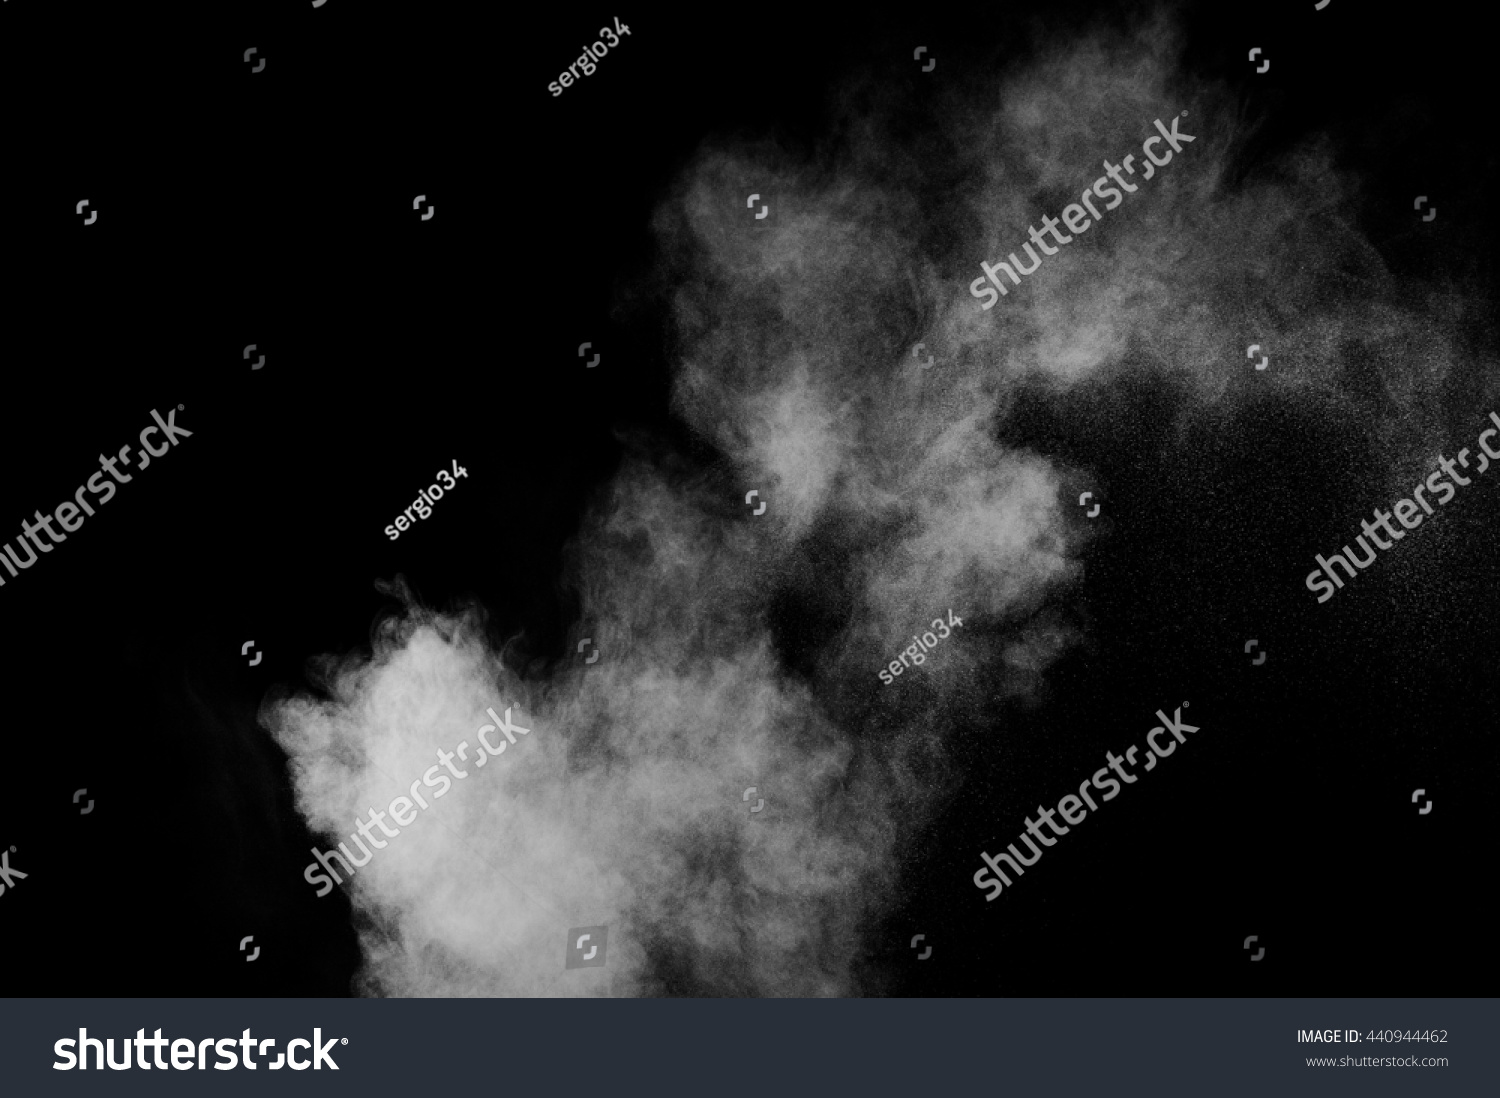 White powder explosion on black background. #440944462